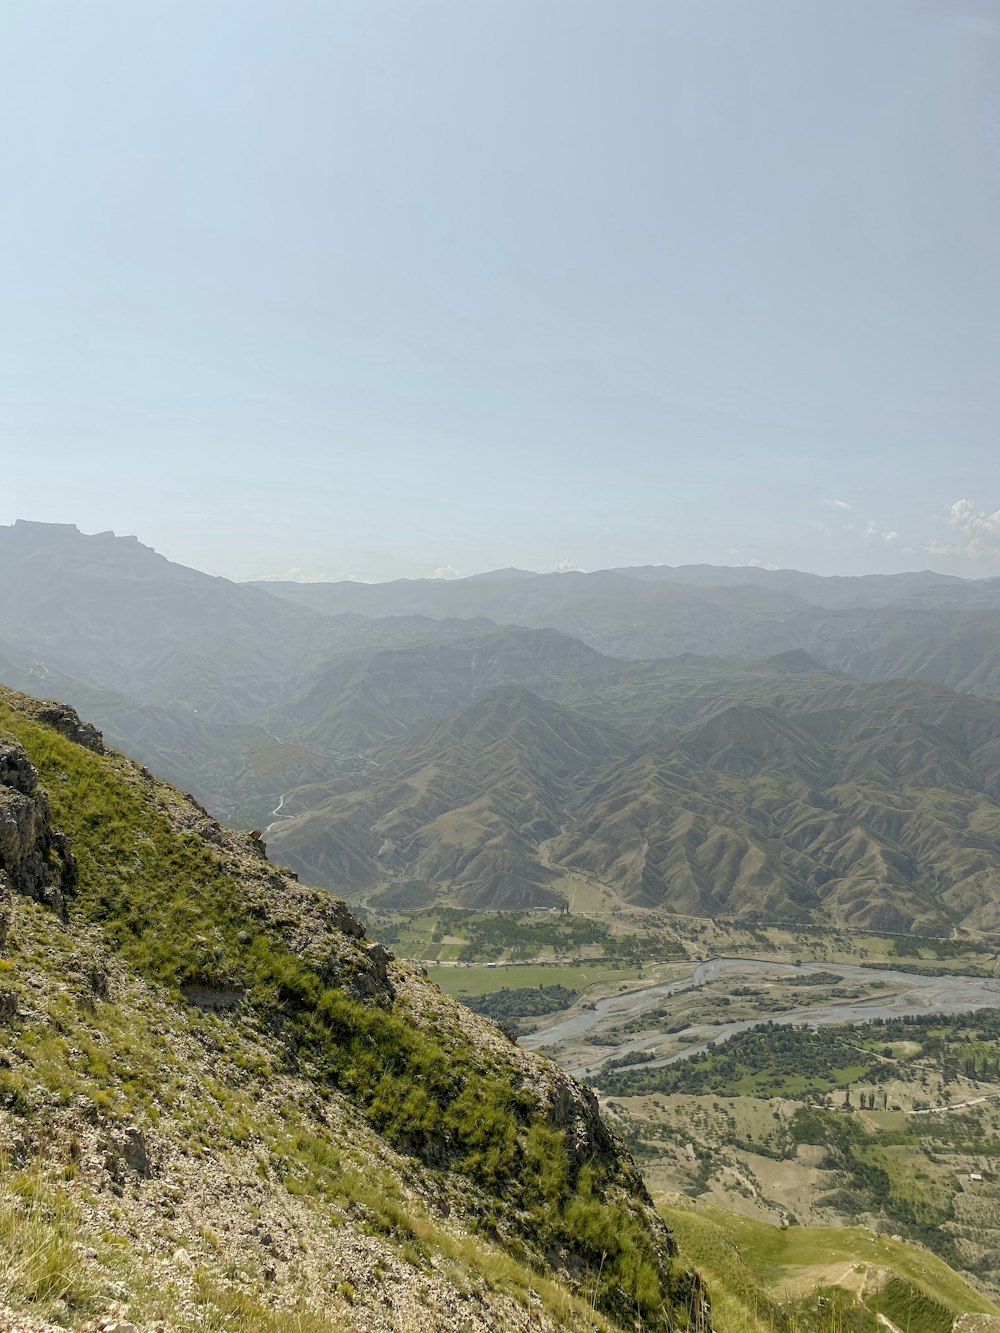 a man sitting on top of a lush green hillside